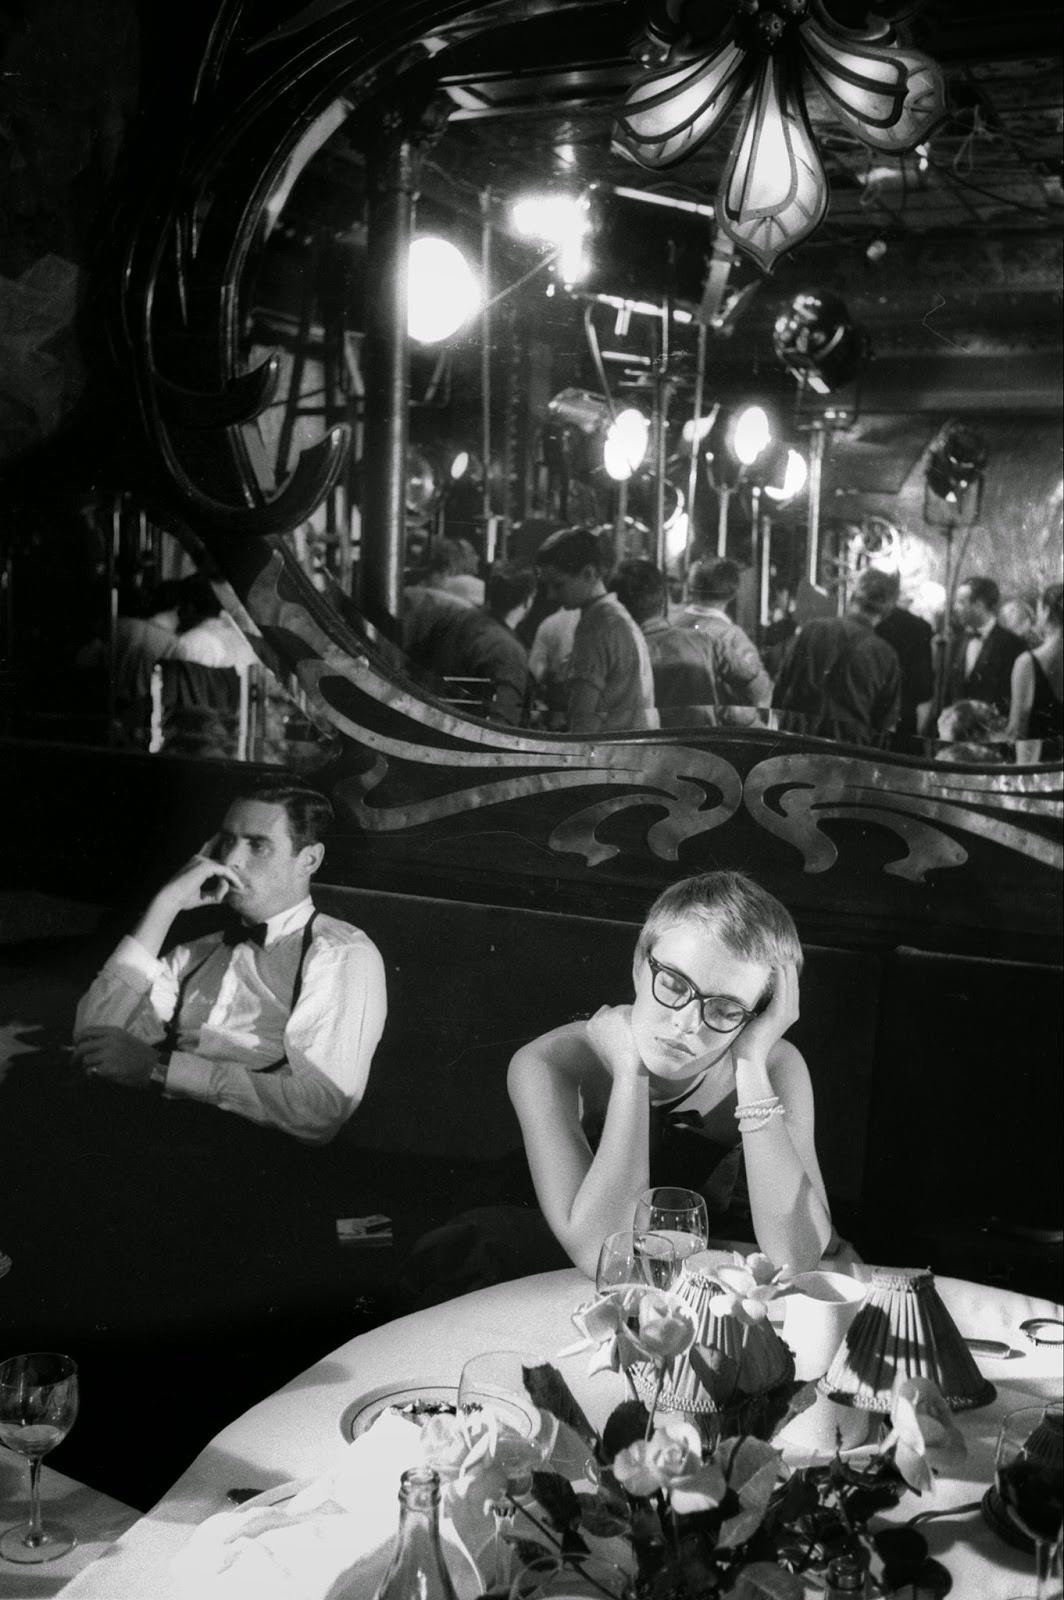 Jean Seberg during filming of "Bonjour Tristesse" at Maxim's restaurant in Paris, 1957